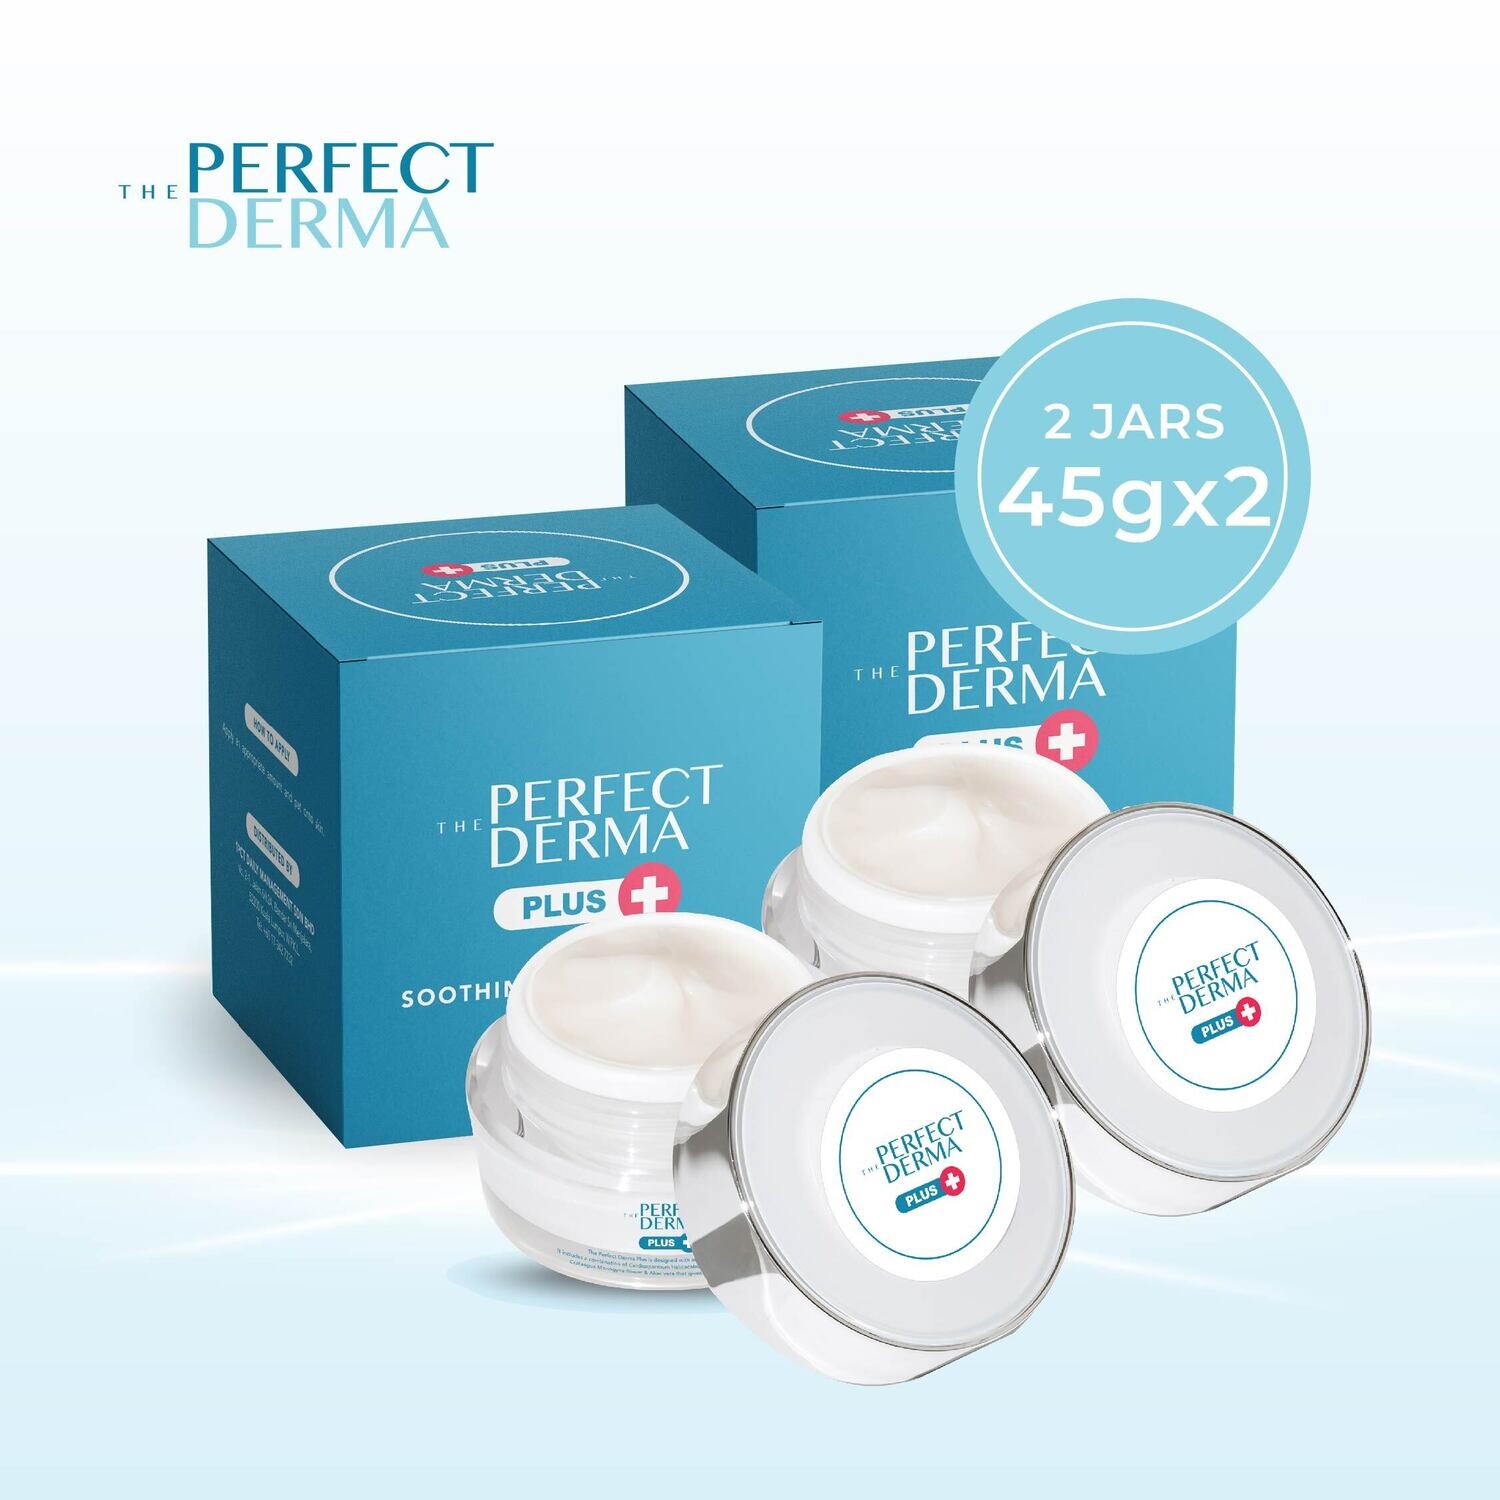 The Perfect Derma Plus